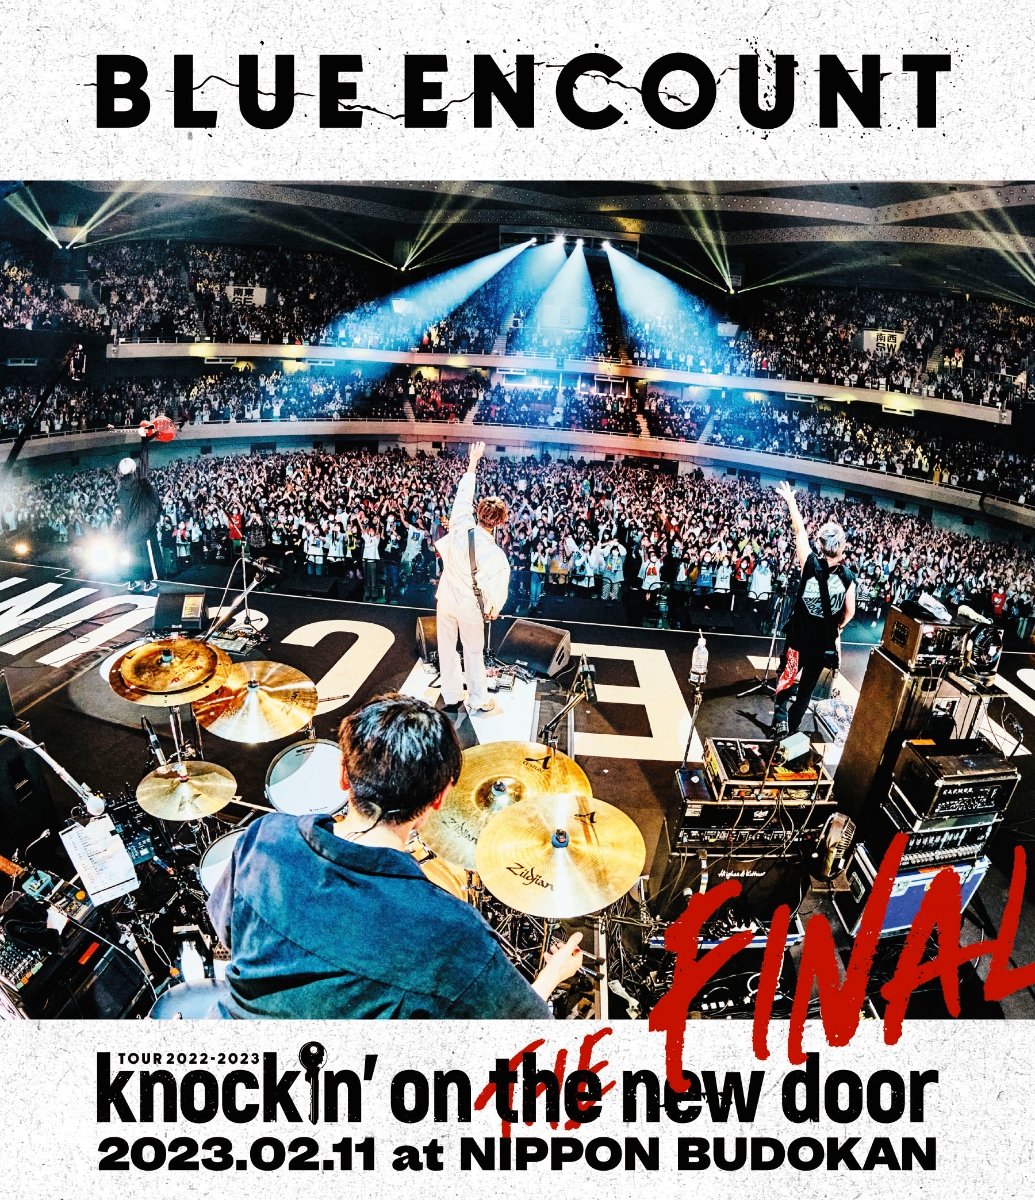 「BLUE ENCOUNT TOUR 2022-2023 〜knockin' on the new door〜THE FINAL」2023.02.11 at NIPPON BUDOKAN(Blu-ray通常盤)【Blu-ray】画像